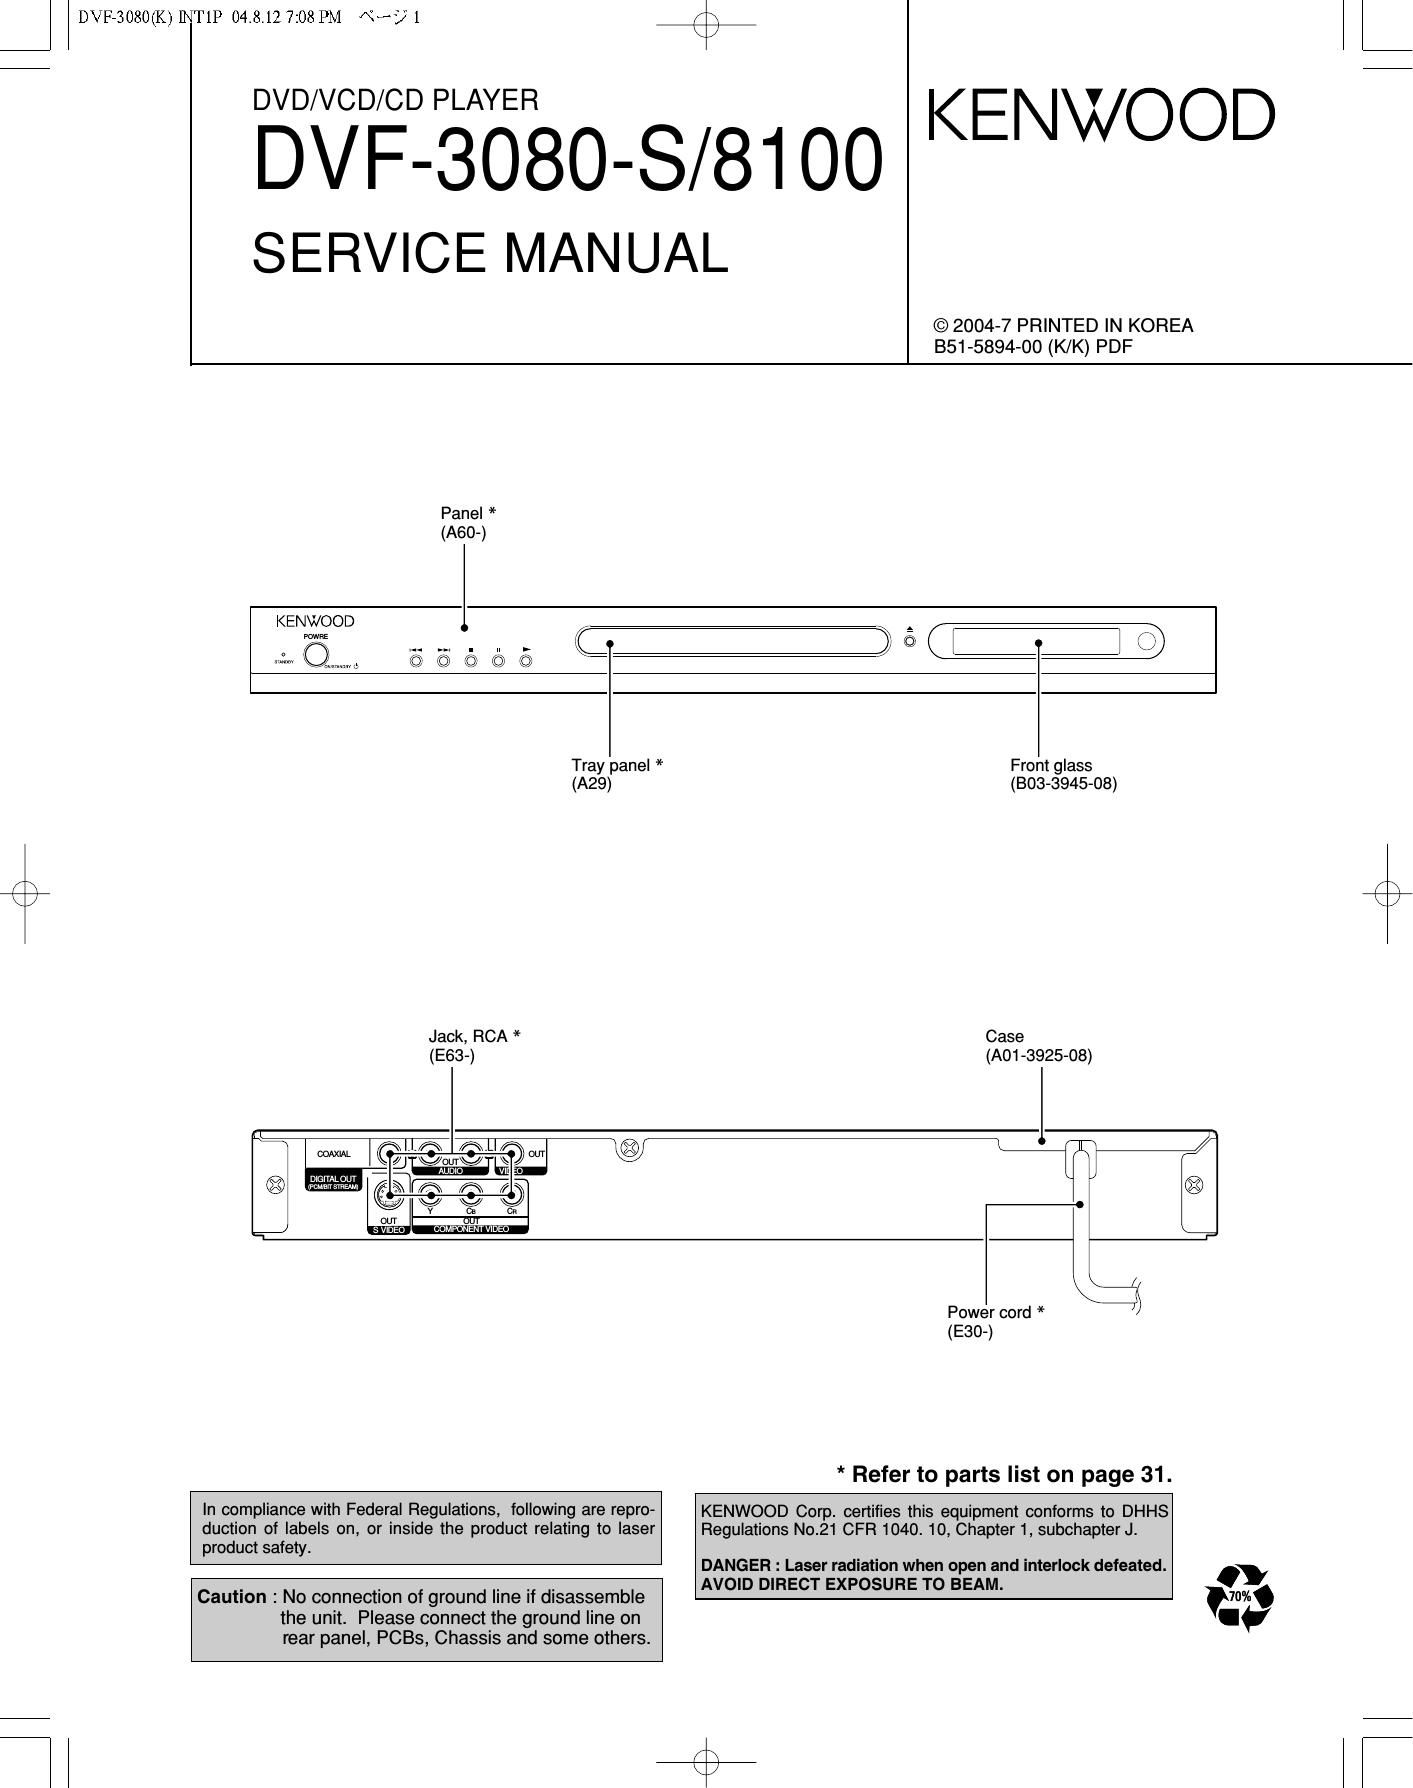 Kenwood DVF 3080 S Service Manual